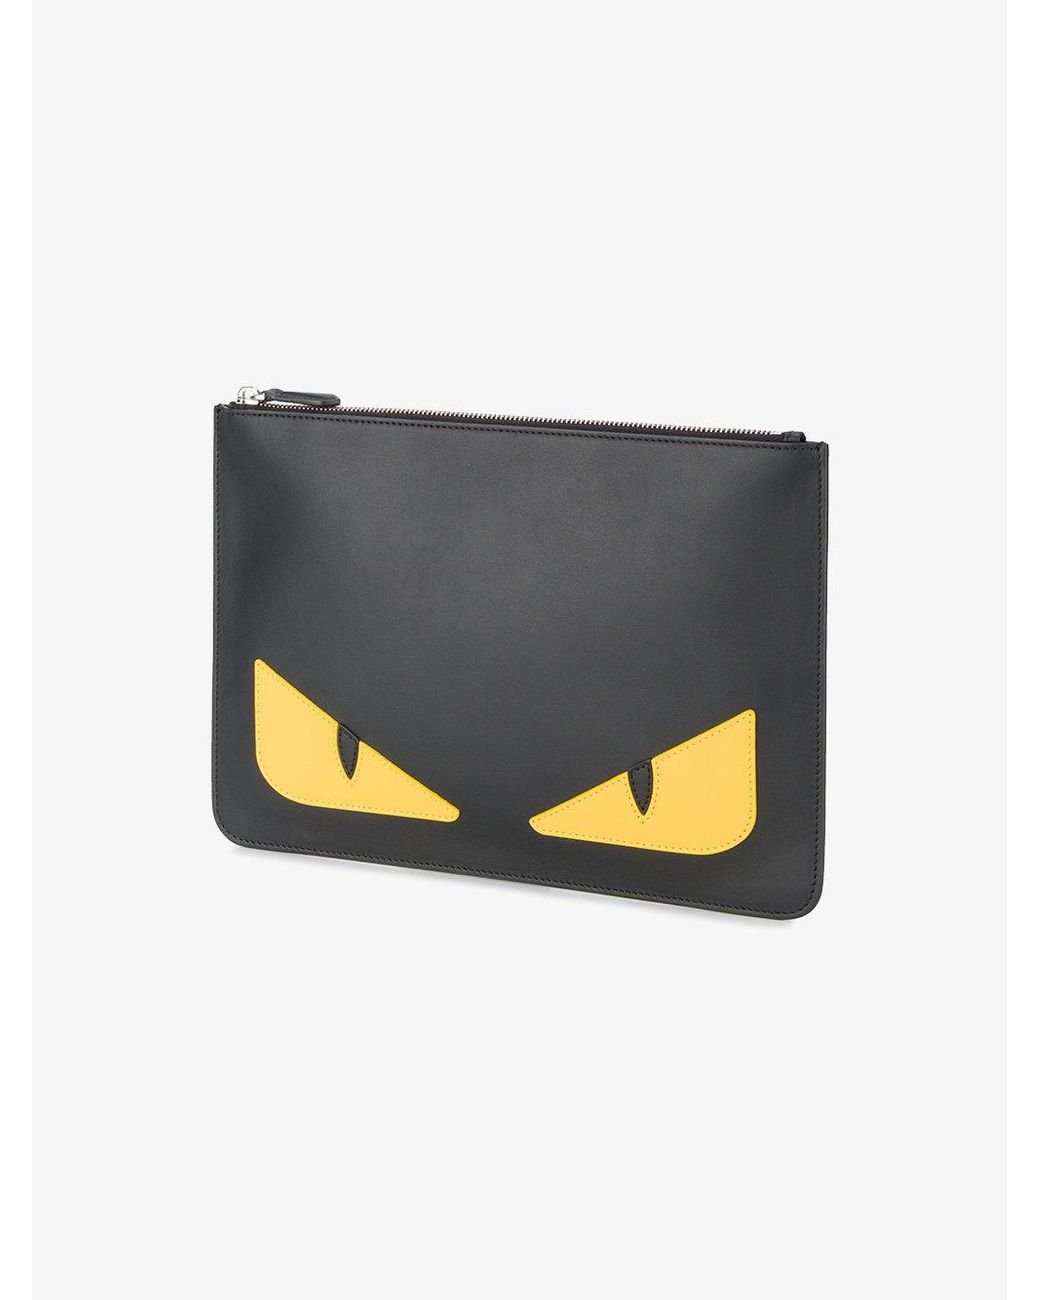 Authentic FENDI Monster Black Leather Zip Clutch Pouch Bag | eBay